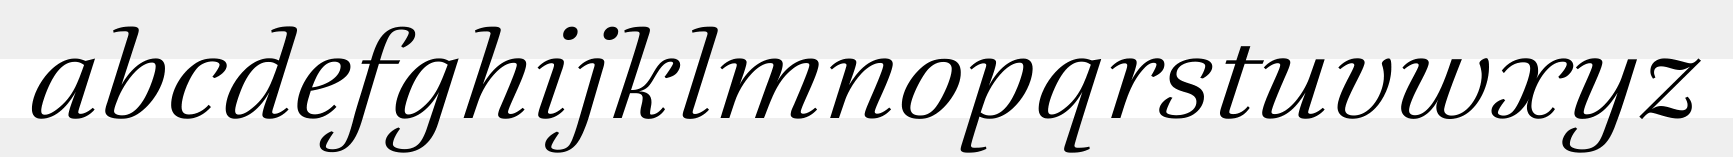 Ruse X010 Italic sample